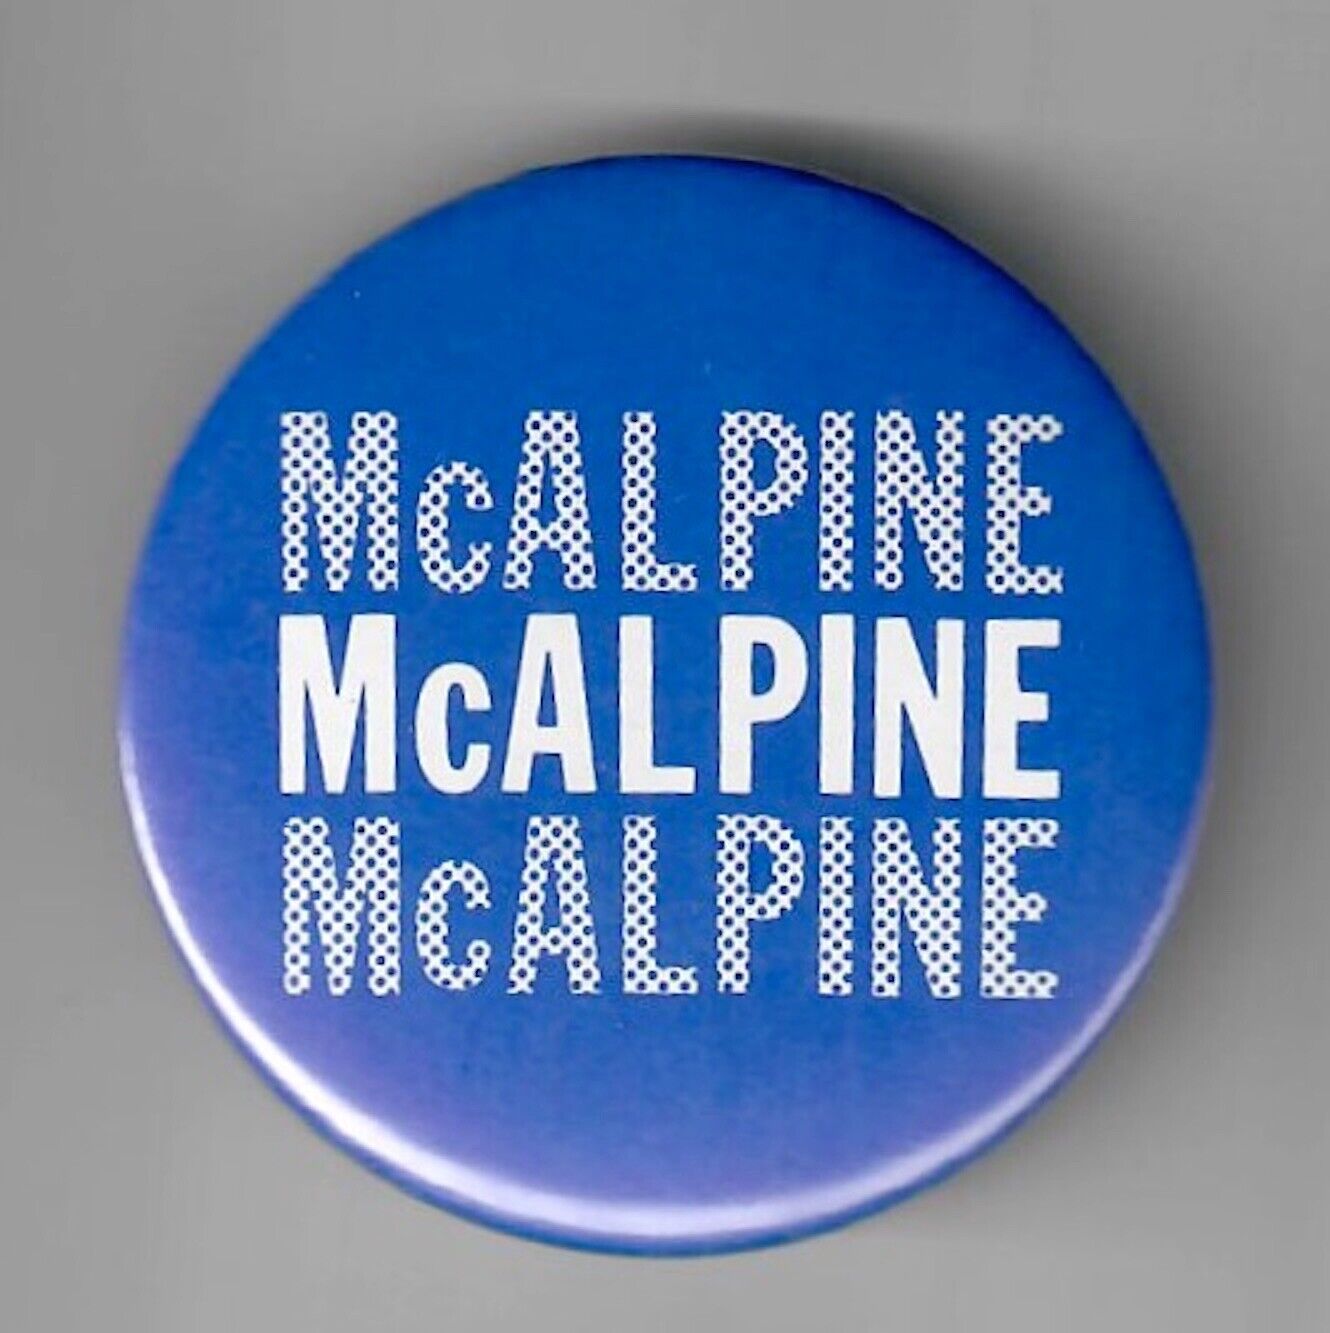 Former Alaska Lt. Governor Steve McAlpine Button from 1990 Democratic Primary